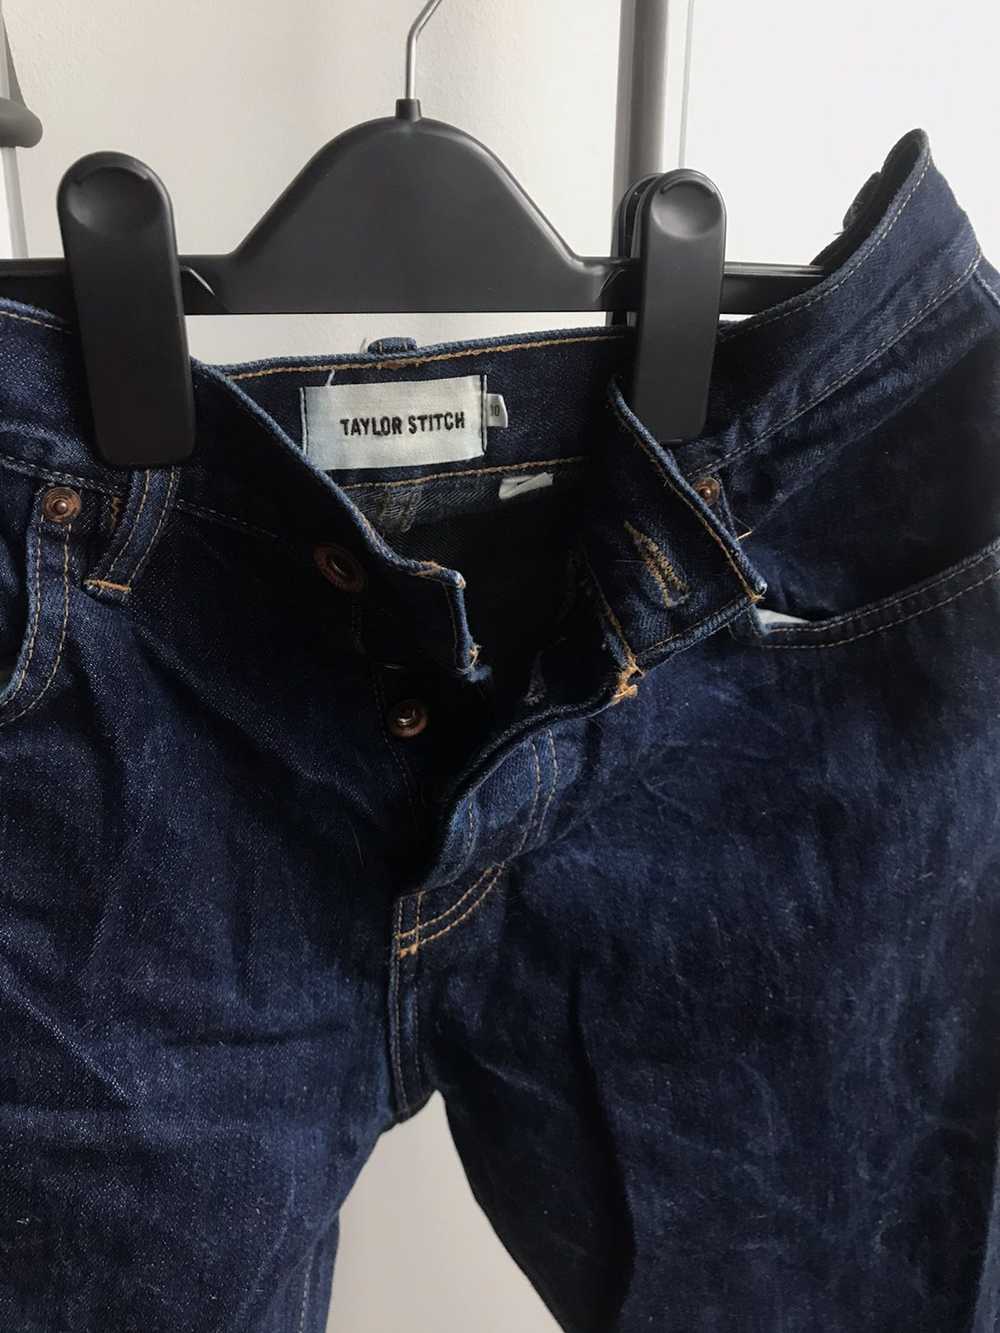 Taylor Stitch Selvedge Denim Jeans 30x32 - image 6